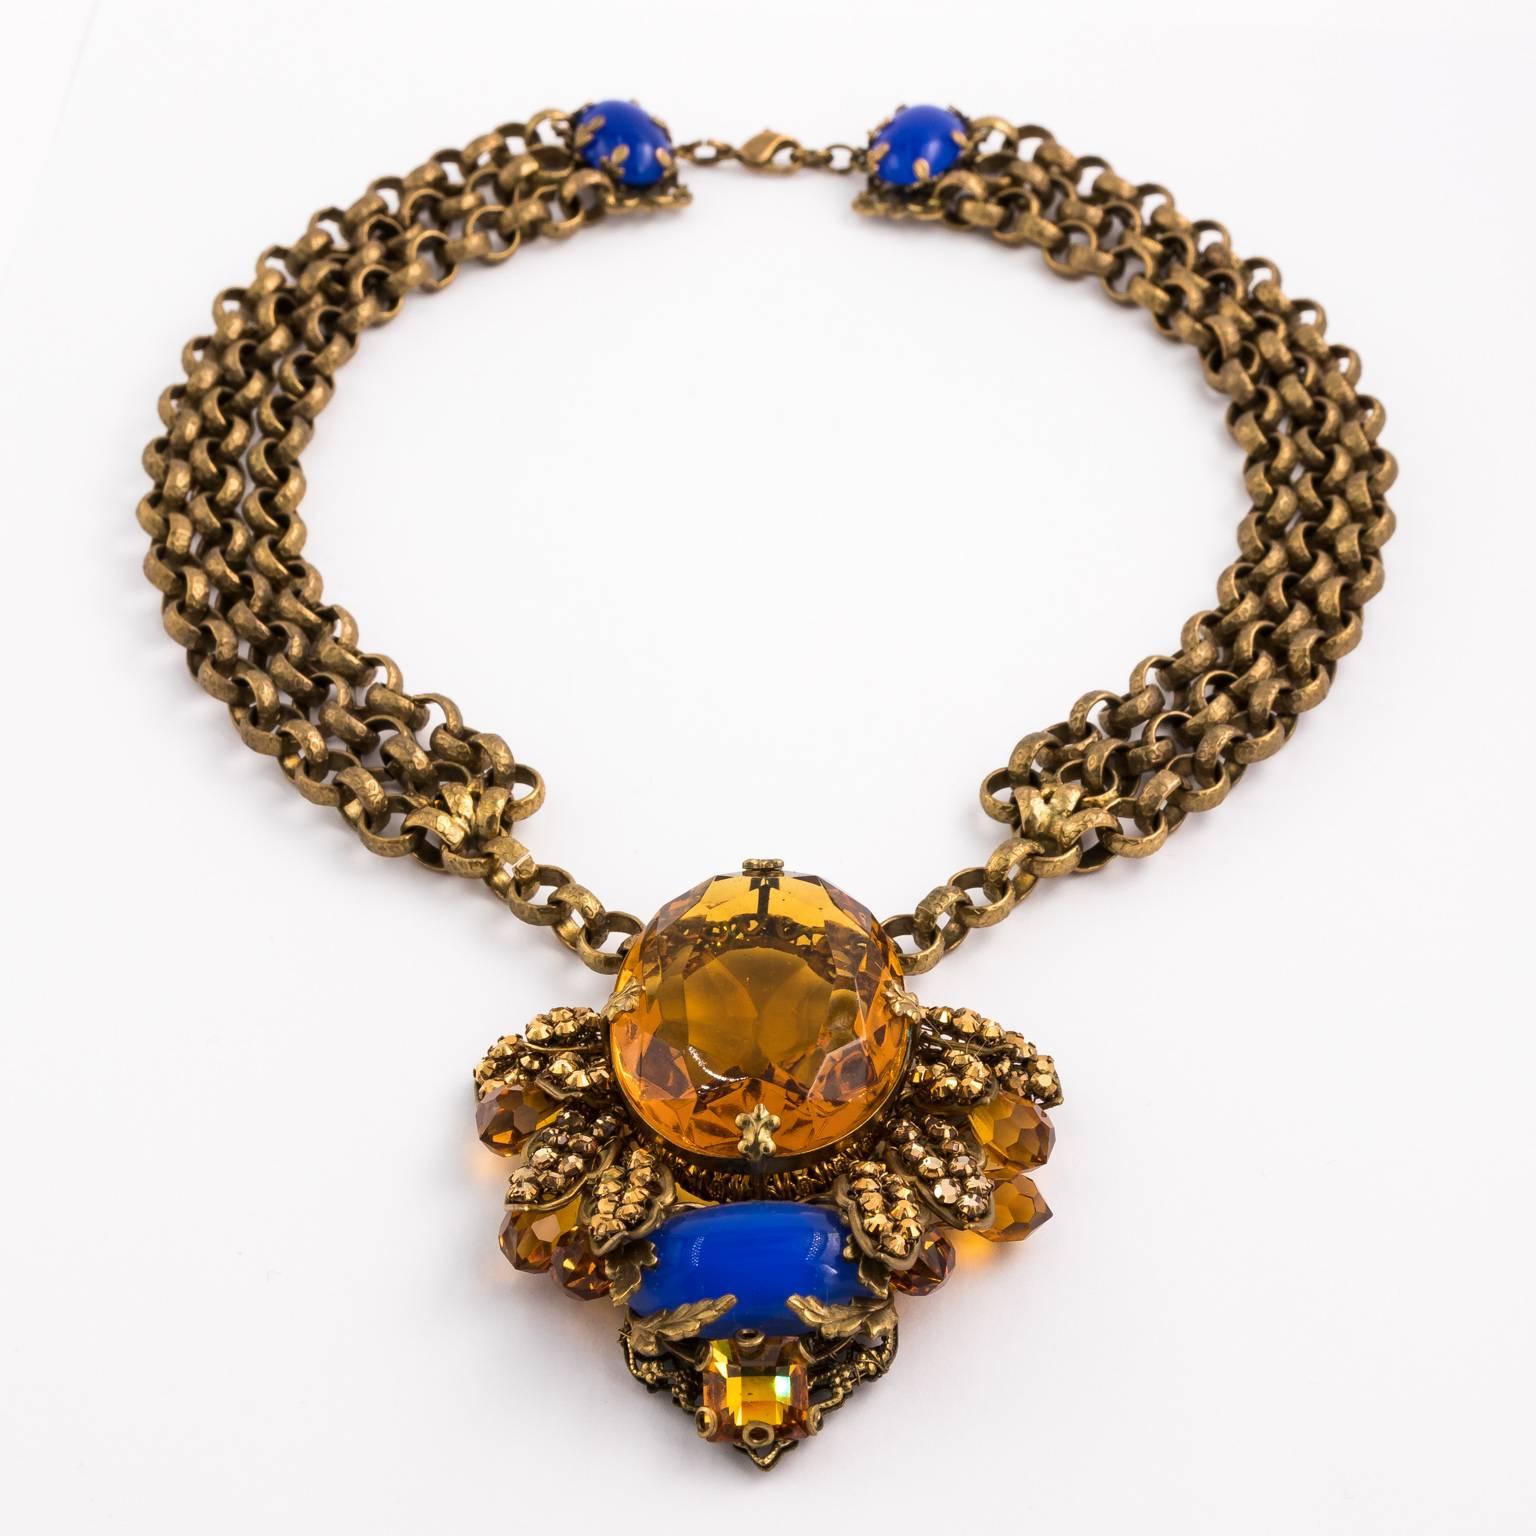 Bijoux Heart Necklace with Large Citrine Glass Centre Piece by Dita Von Teese 4